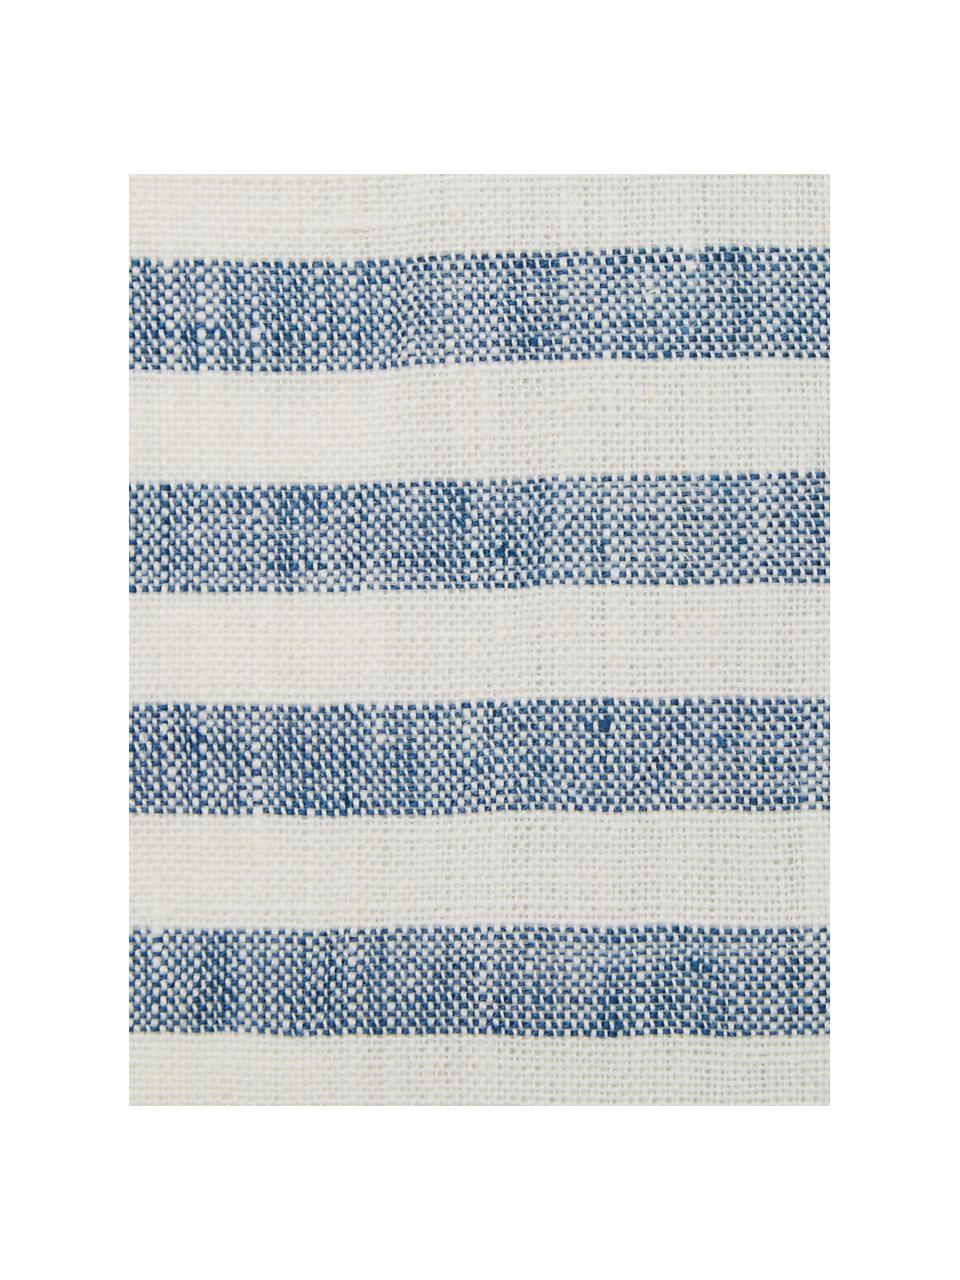 Leinen-Servietten Solami, 6 Stück, Leinen, Hellblau, Weiss, 46 x 46 cm